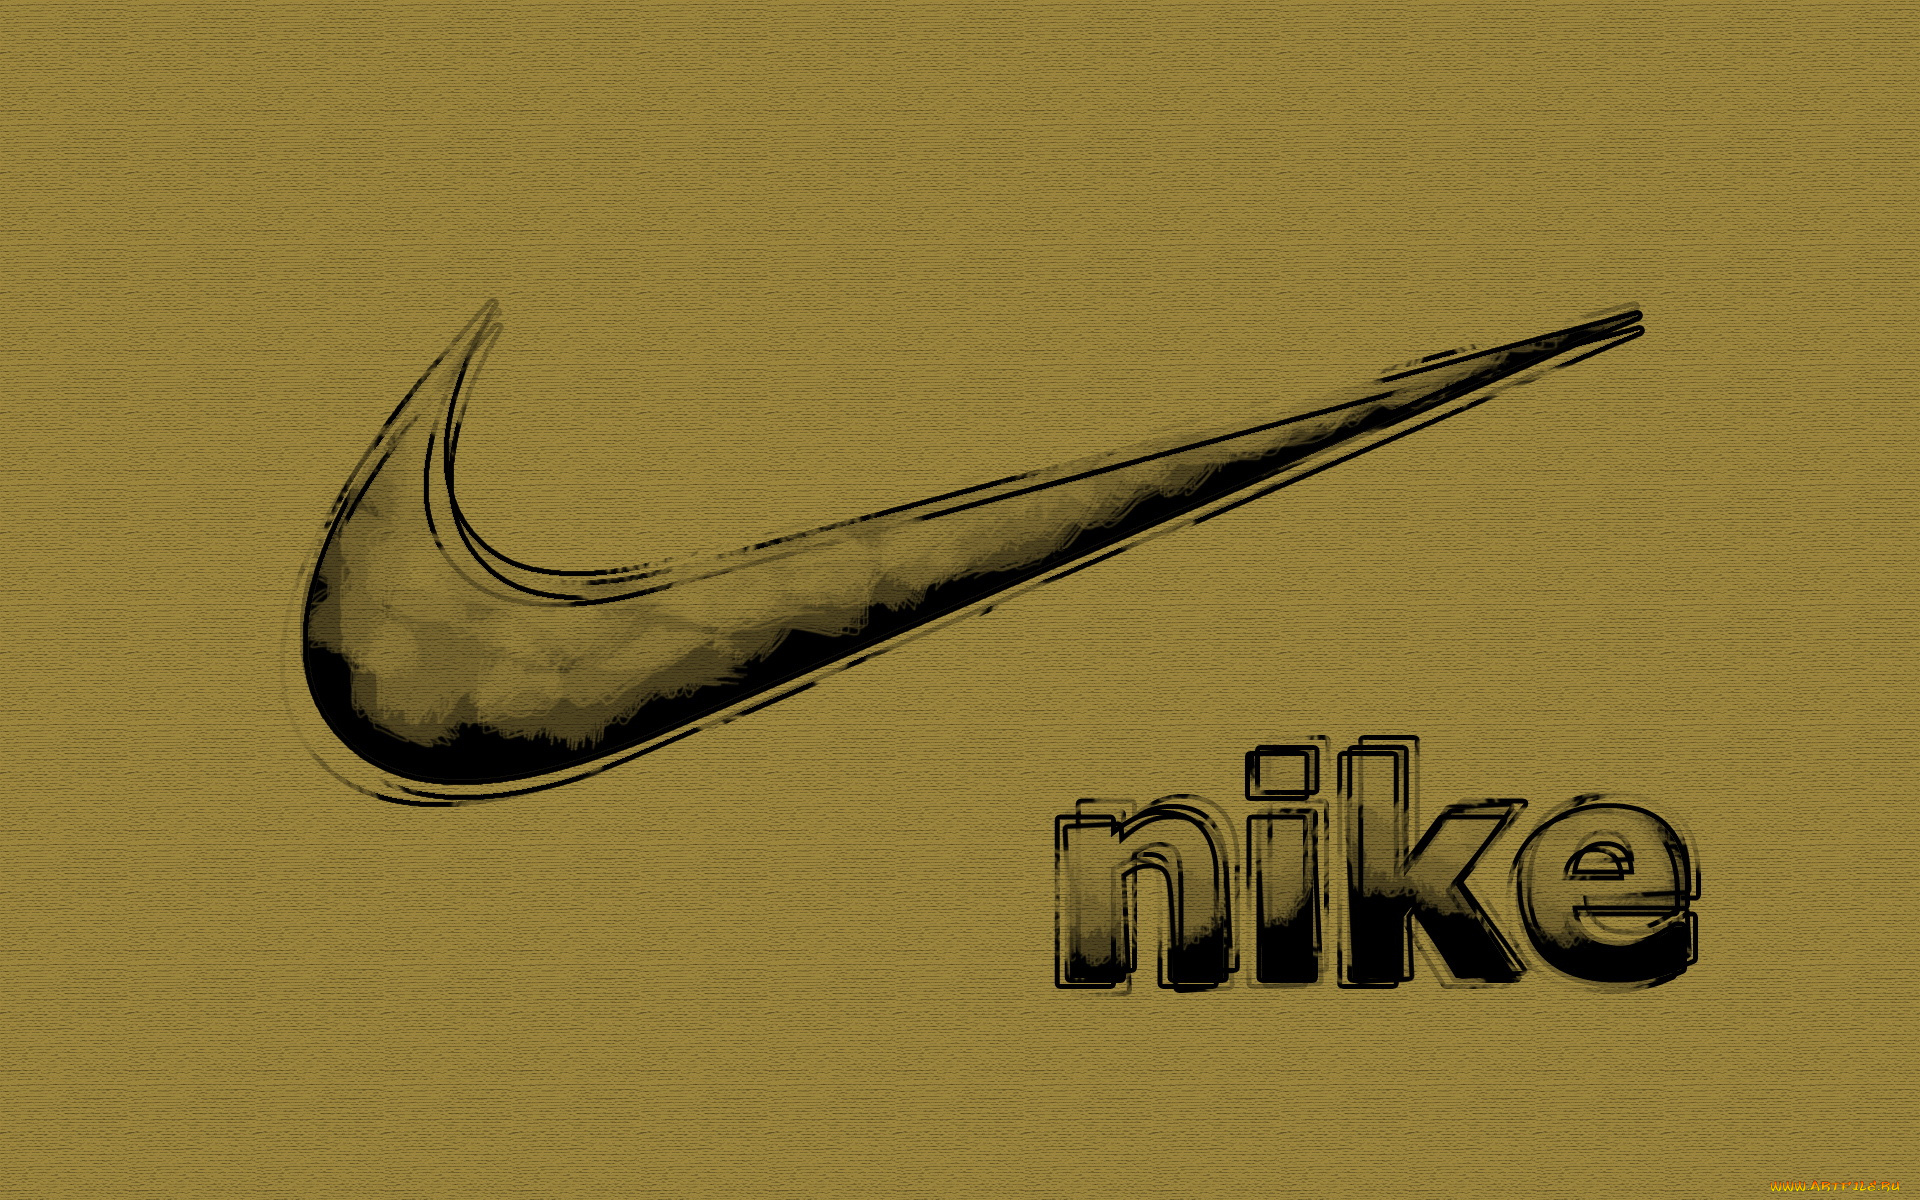 бренды, nike, логотип